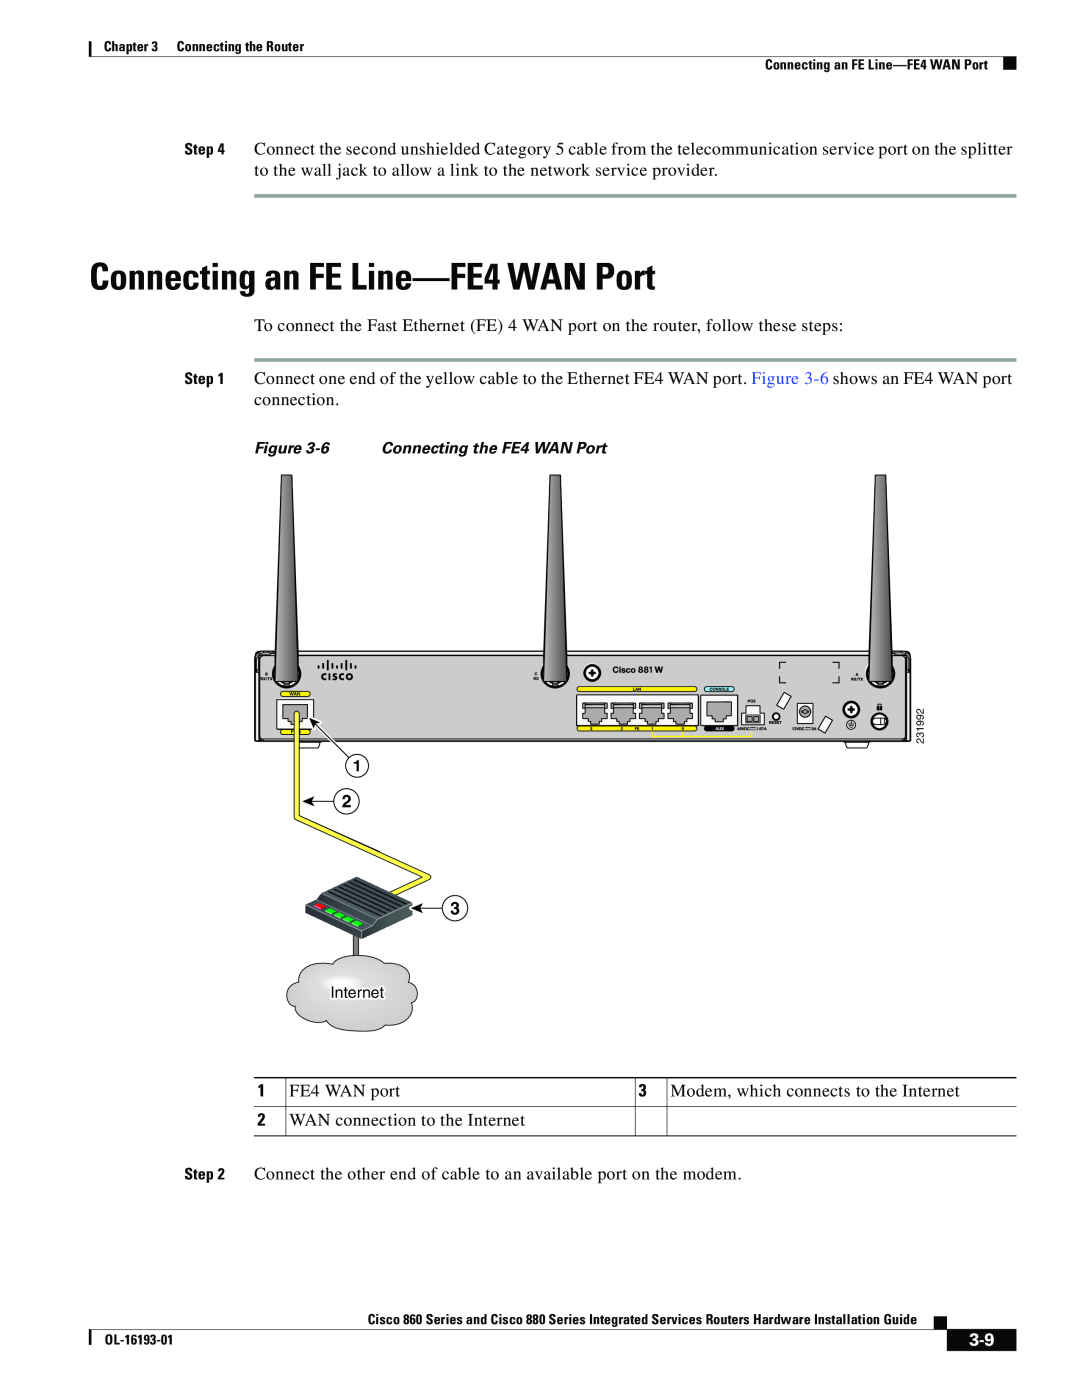 Cisco Systems C892FSPK9, HIG880, 861WGNPK9RF, 860 manual Connecting an FE Line-FE4 WAN Port 